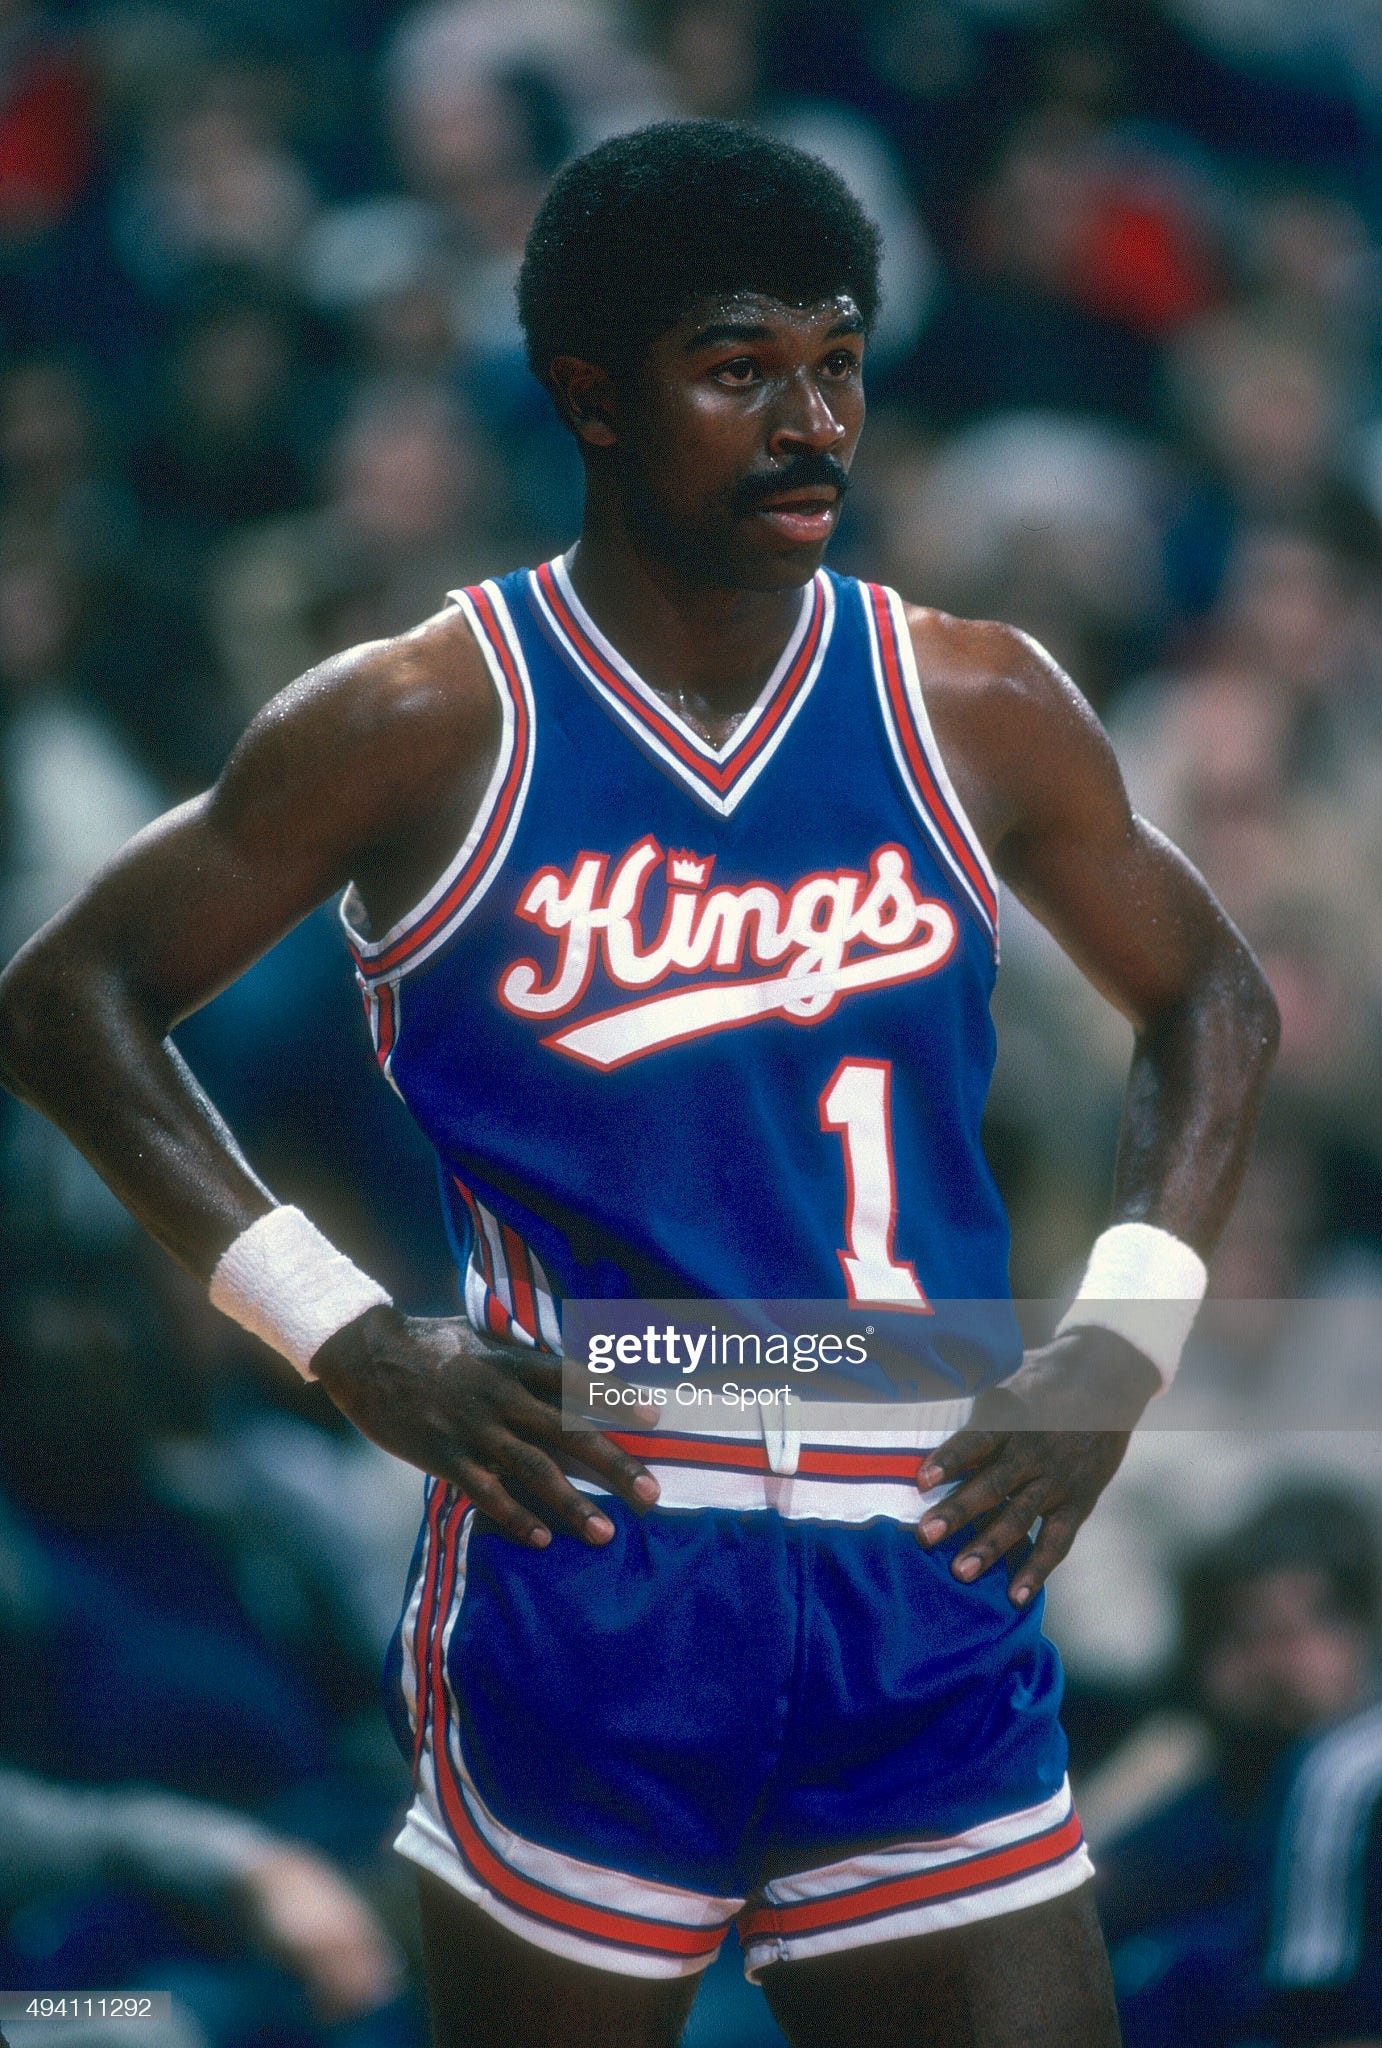 Kansas City Kings Photo - National Basketball Association (NBA